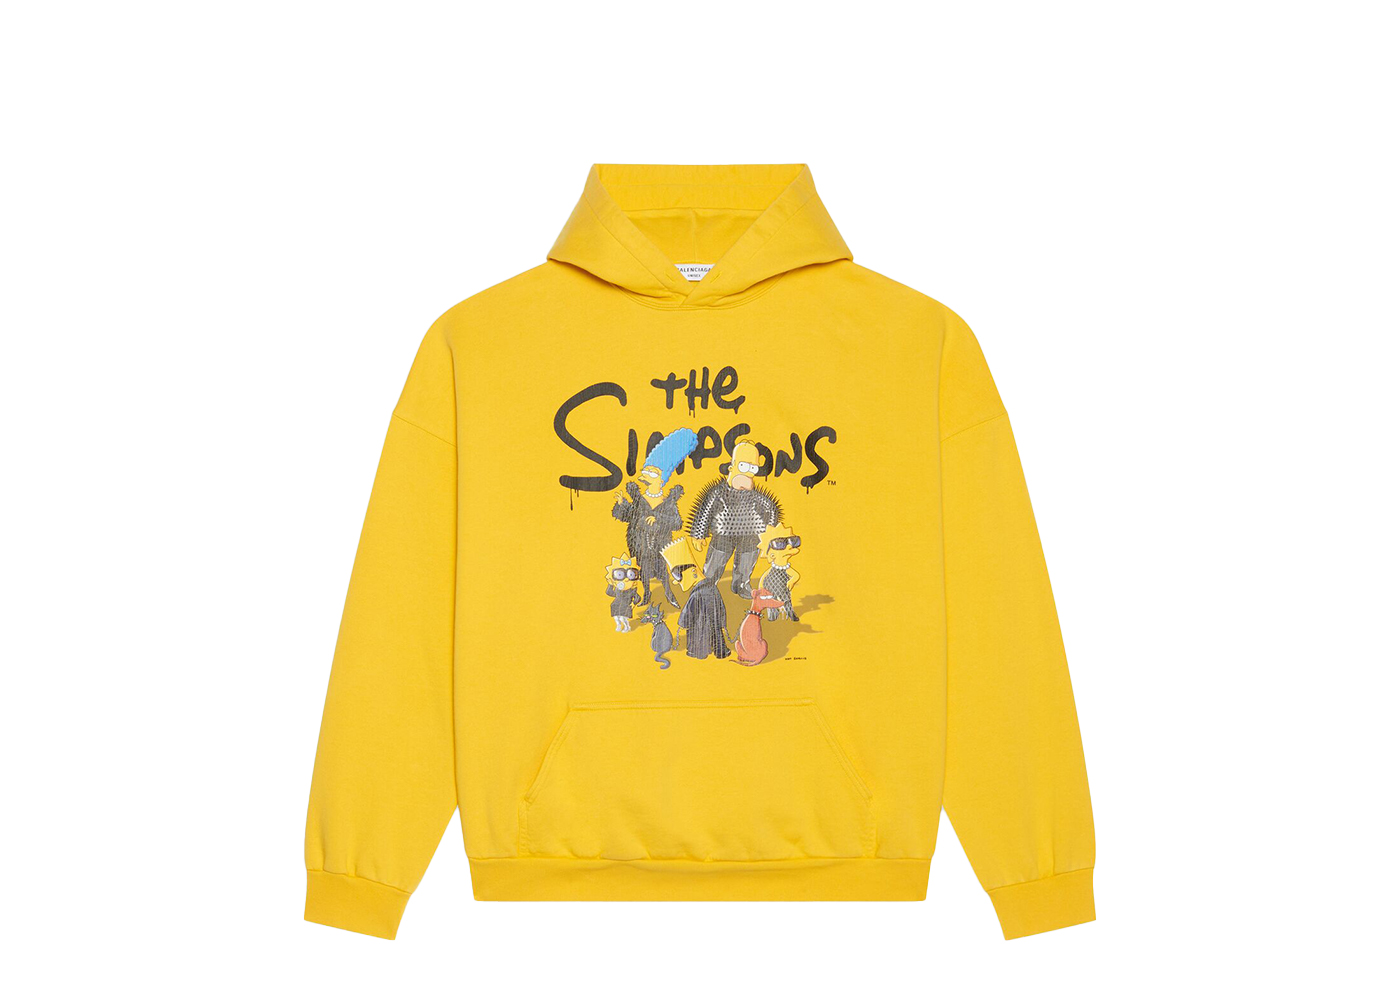 WHITEBalenciaga x The Simpsons hoodie